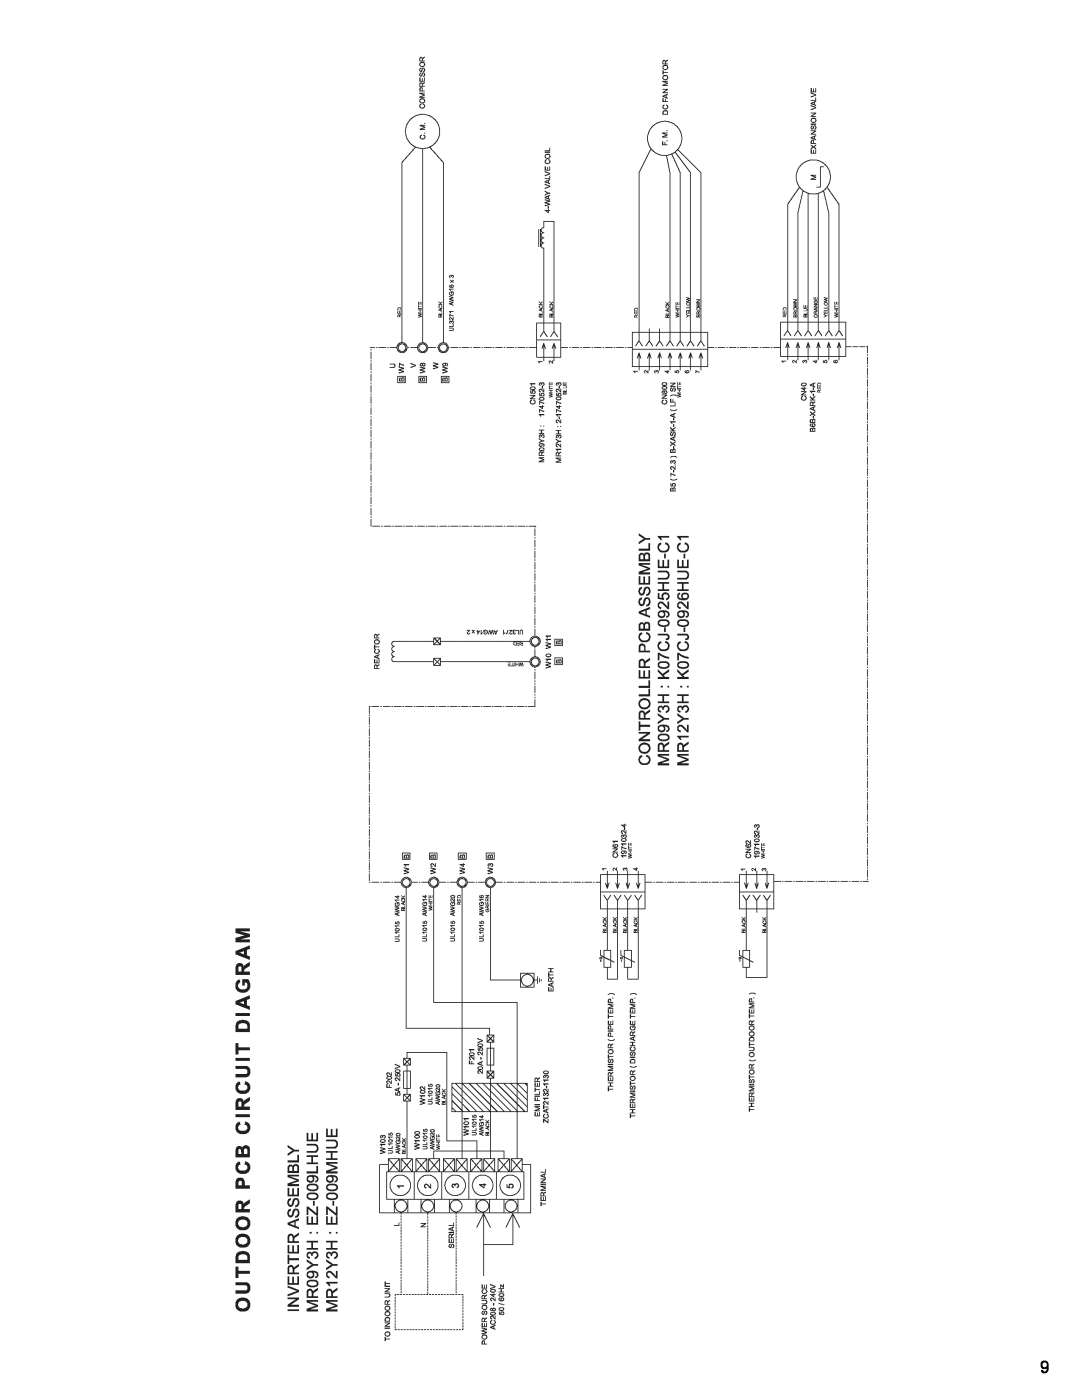 Friedrich manual Outdoor Pcb Circuit Diagram, INVERTER ASSEMBLY MR09Y3H EZ-009LHUE, MR12Y3H EZ-009MHUE 